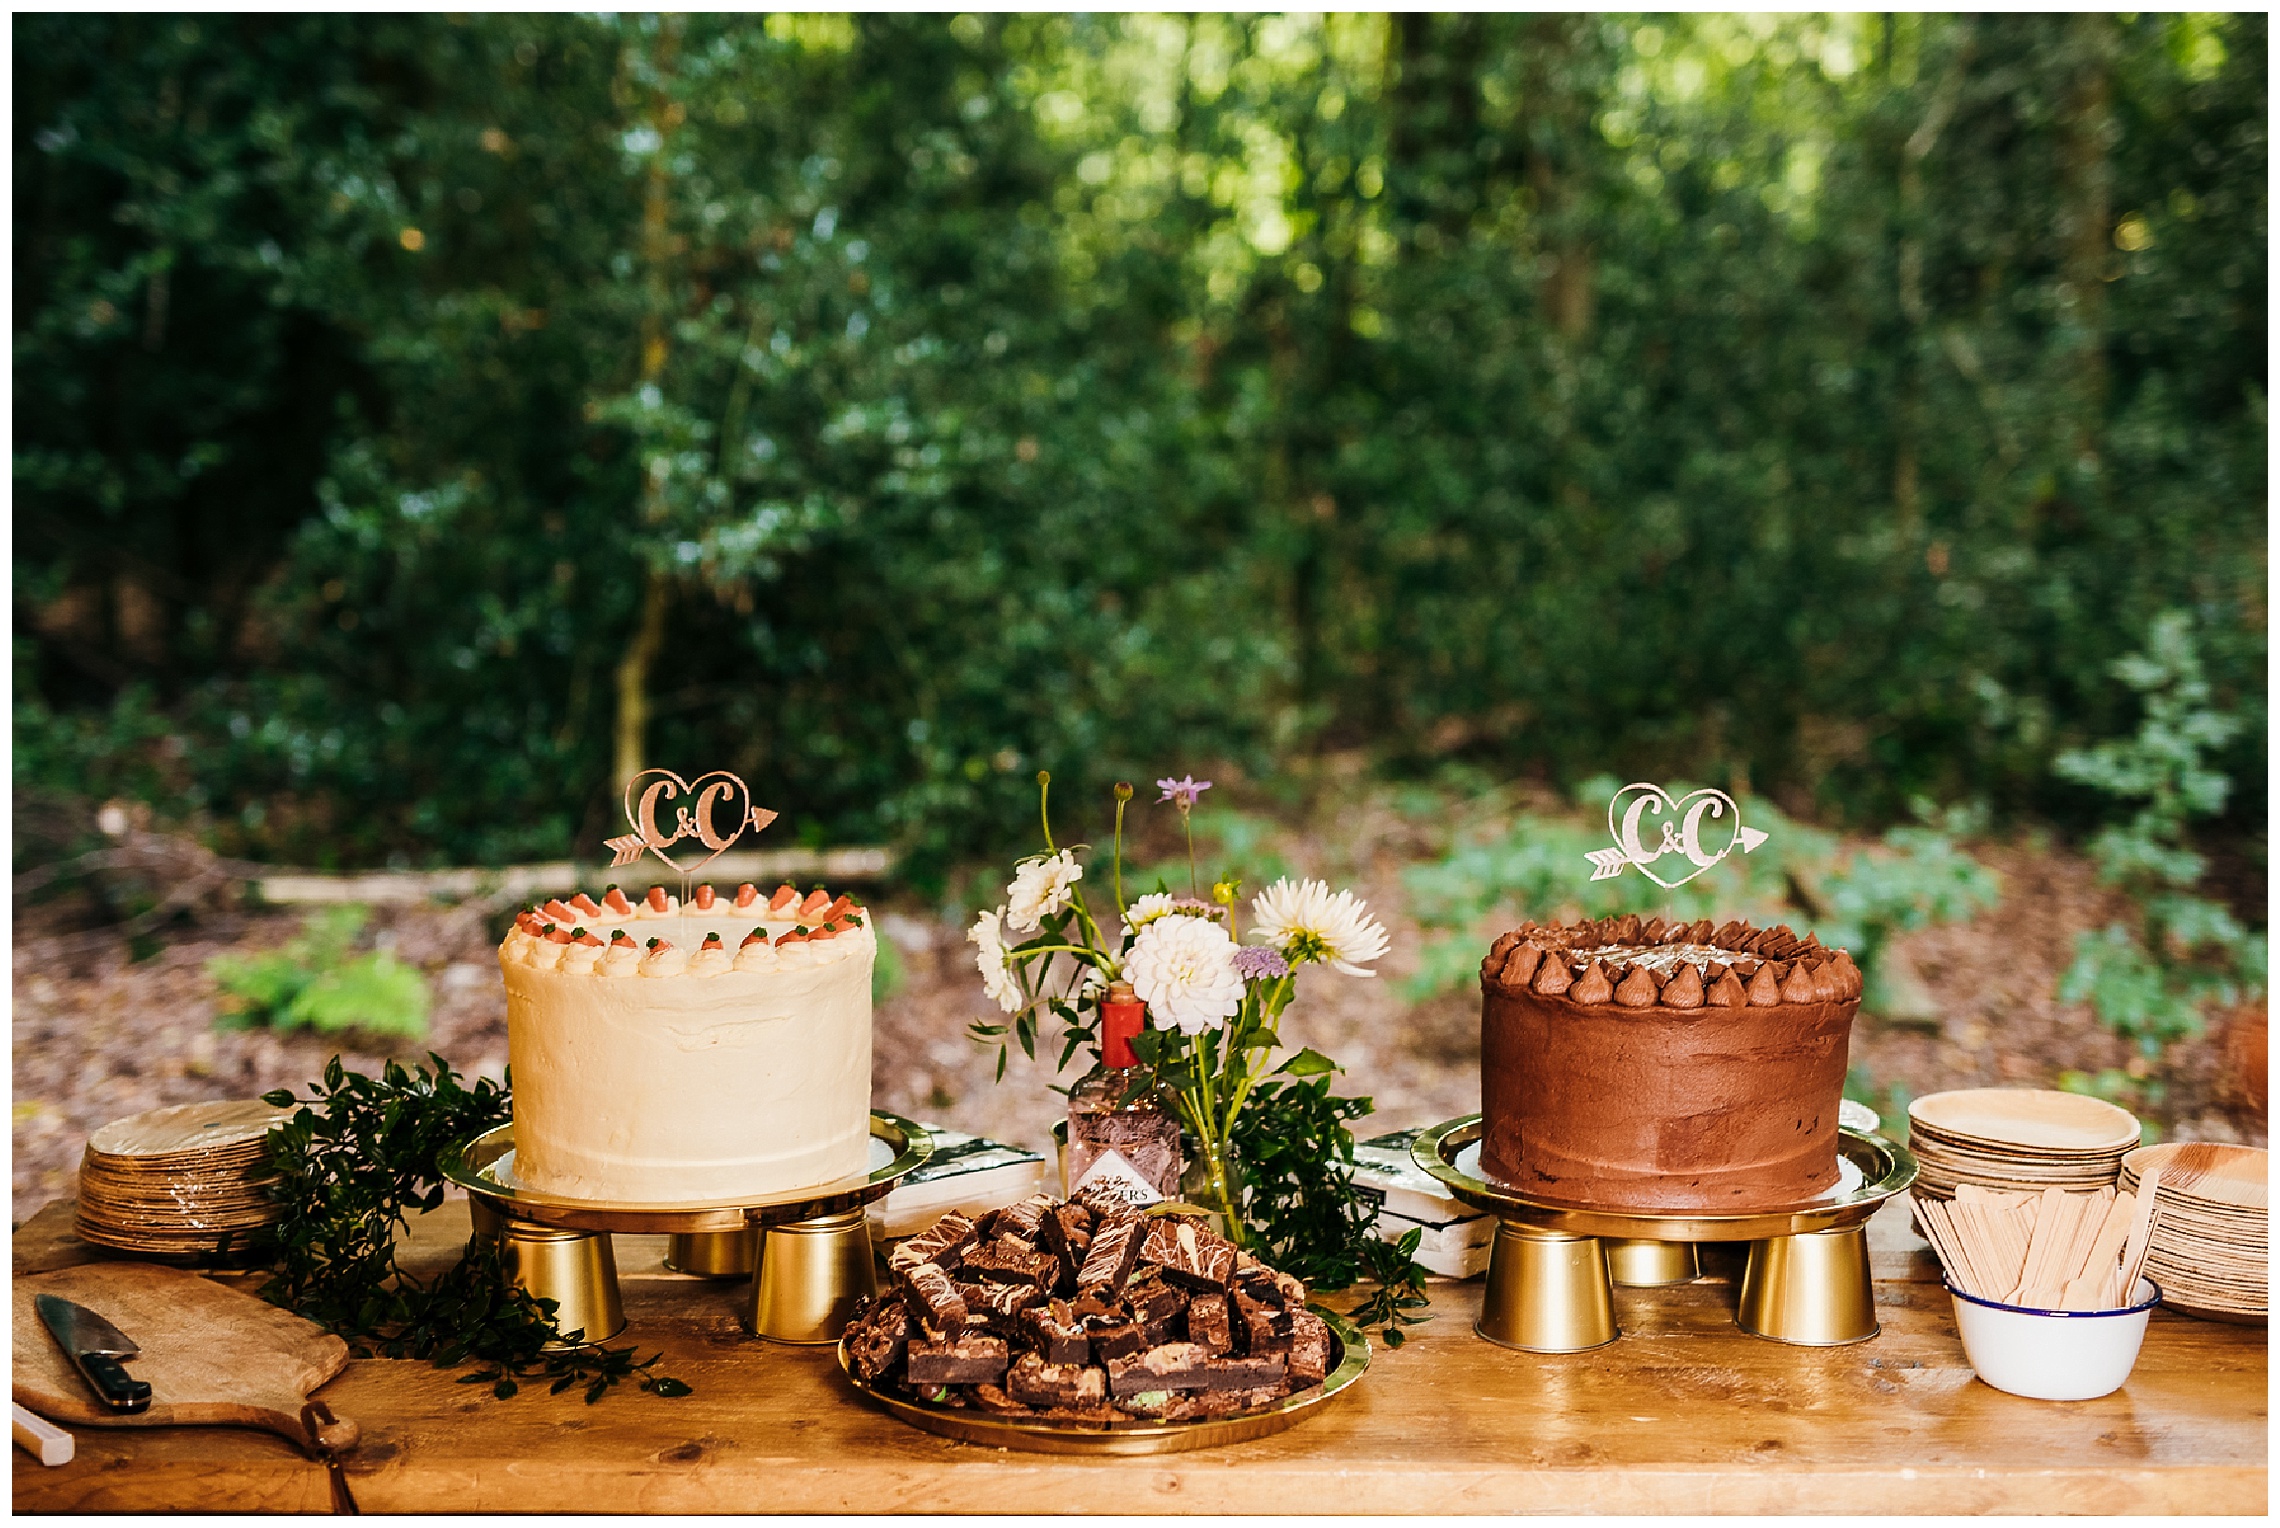 wedding cakes and brownies at woodland weddings